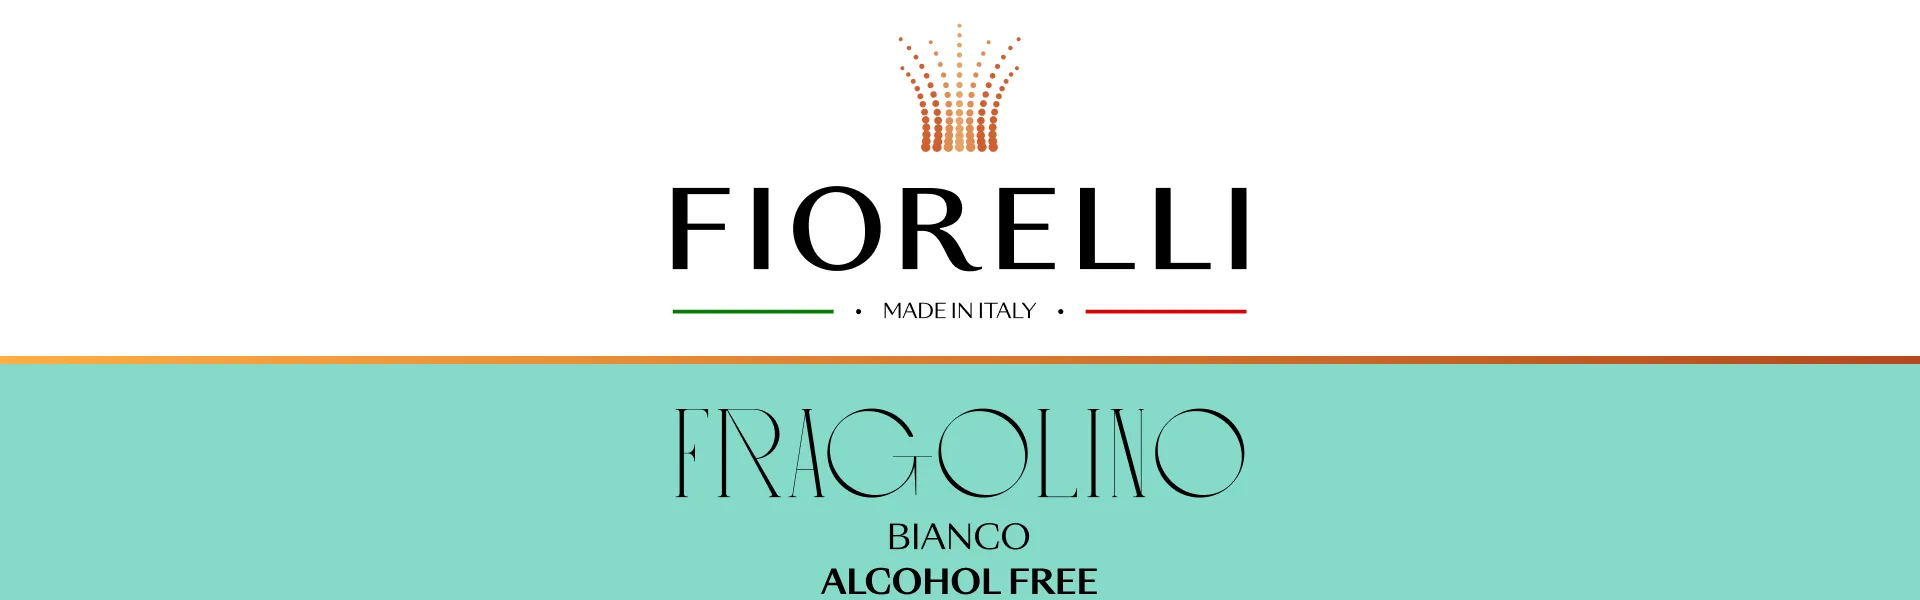 Фото 1 Fiorelli Fragolino Bianco Alcohol Free